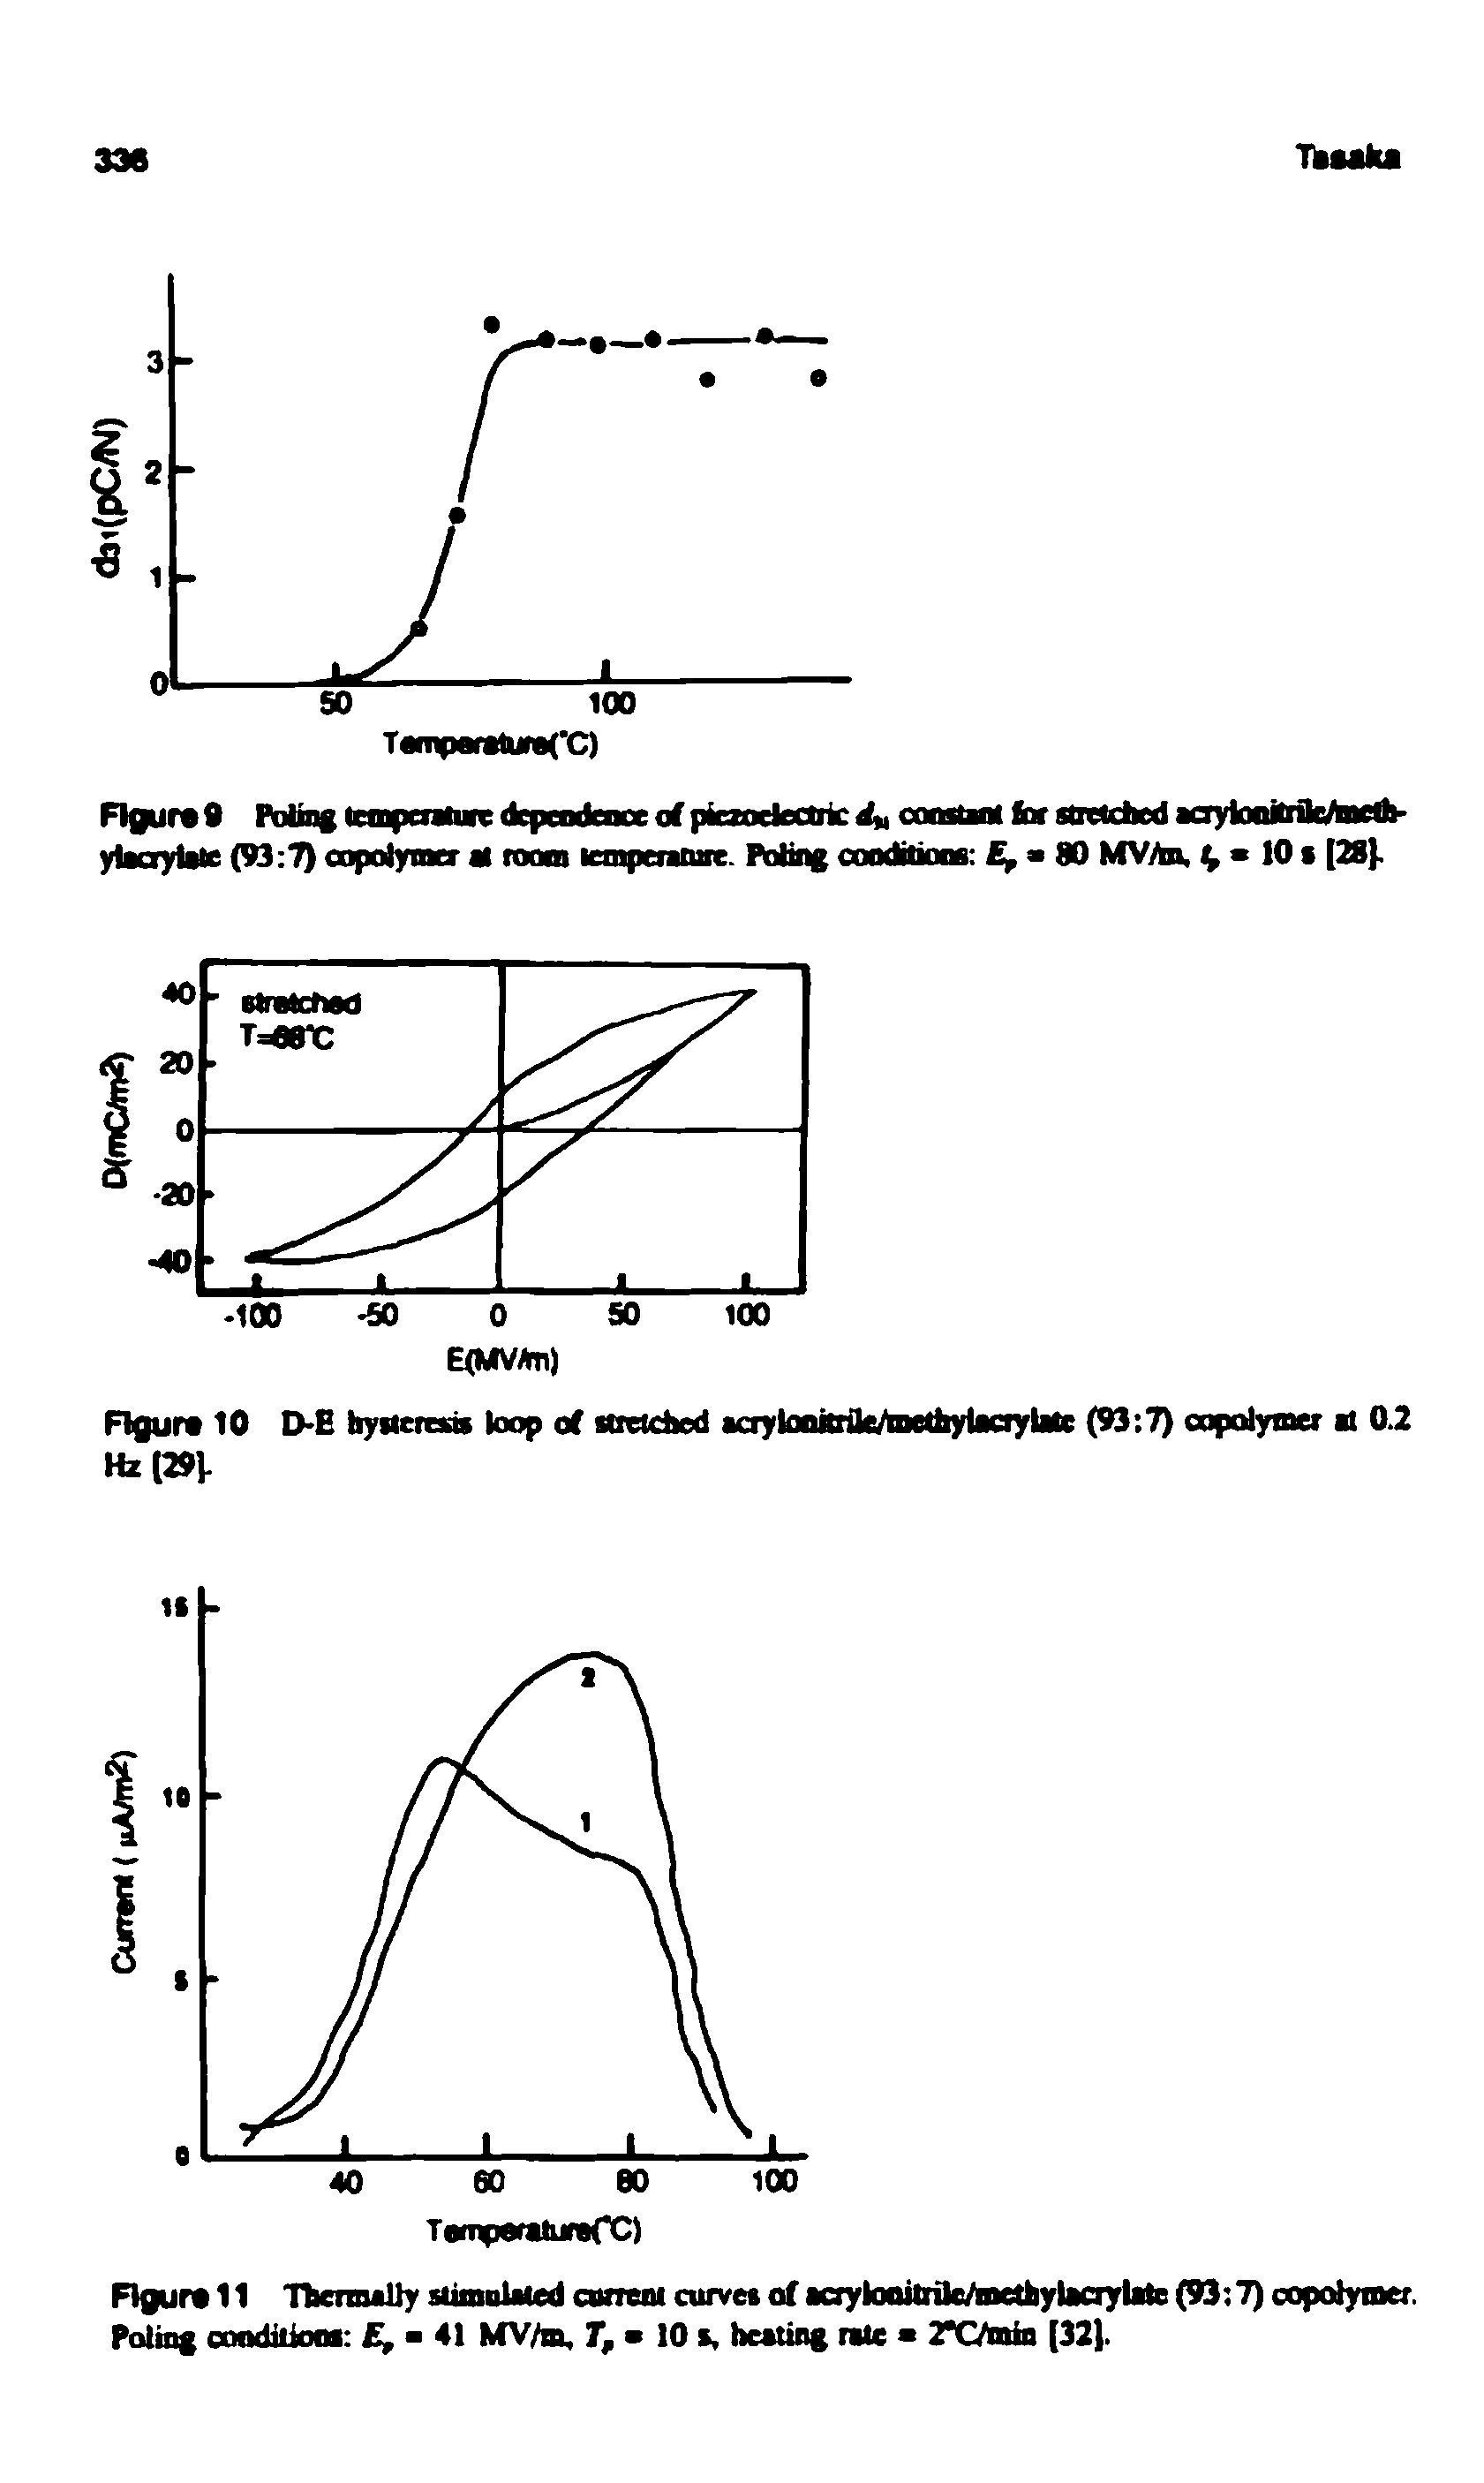 Figure 11 Tbcnnally Mimnlaiwl carreni curve of aaykwitrik/BieOiytocrjrlale (93 7) oopolyiDef. Poling oMidiiiou , 41 MV/n, 10 a, heating rale 2 CMa (32).